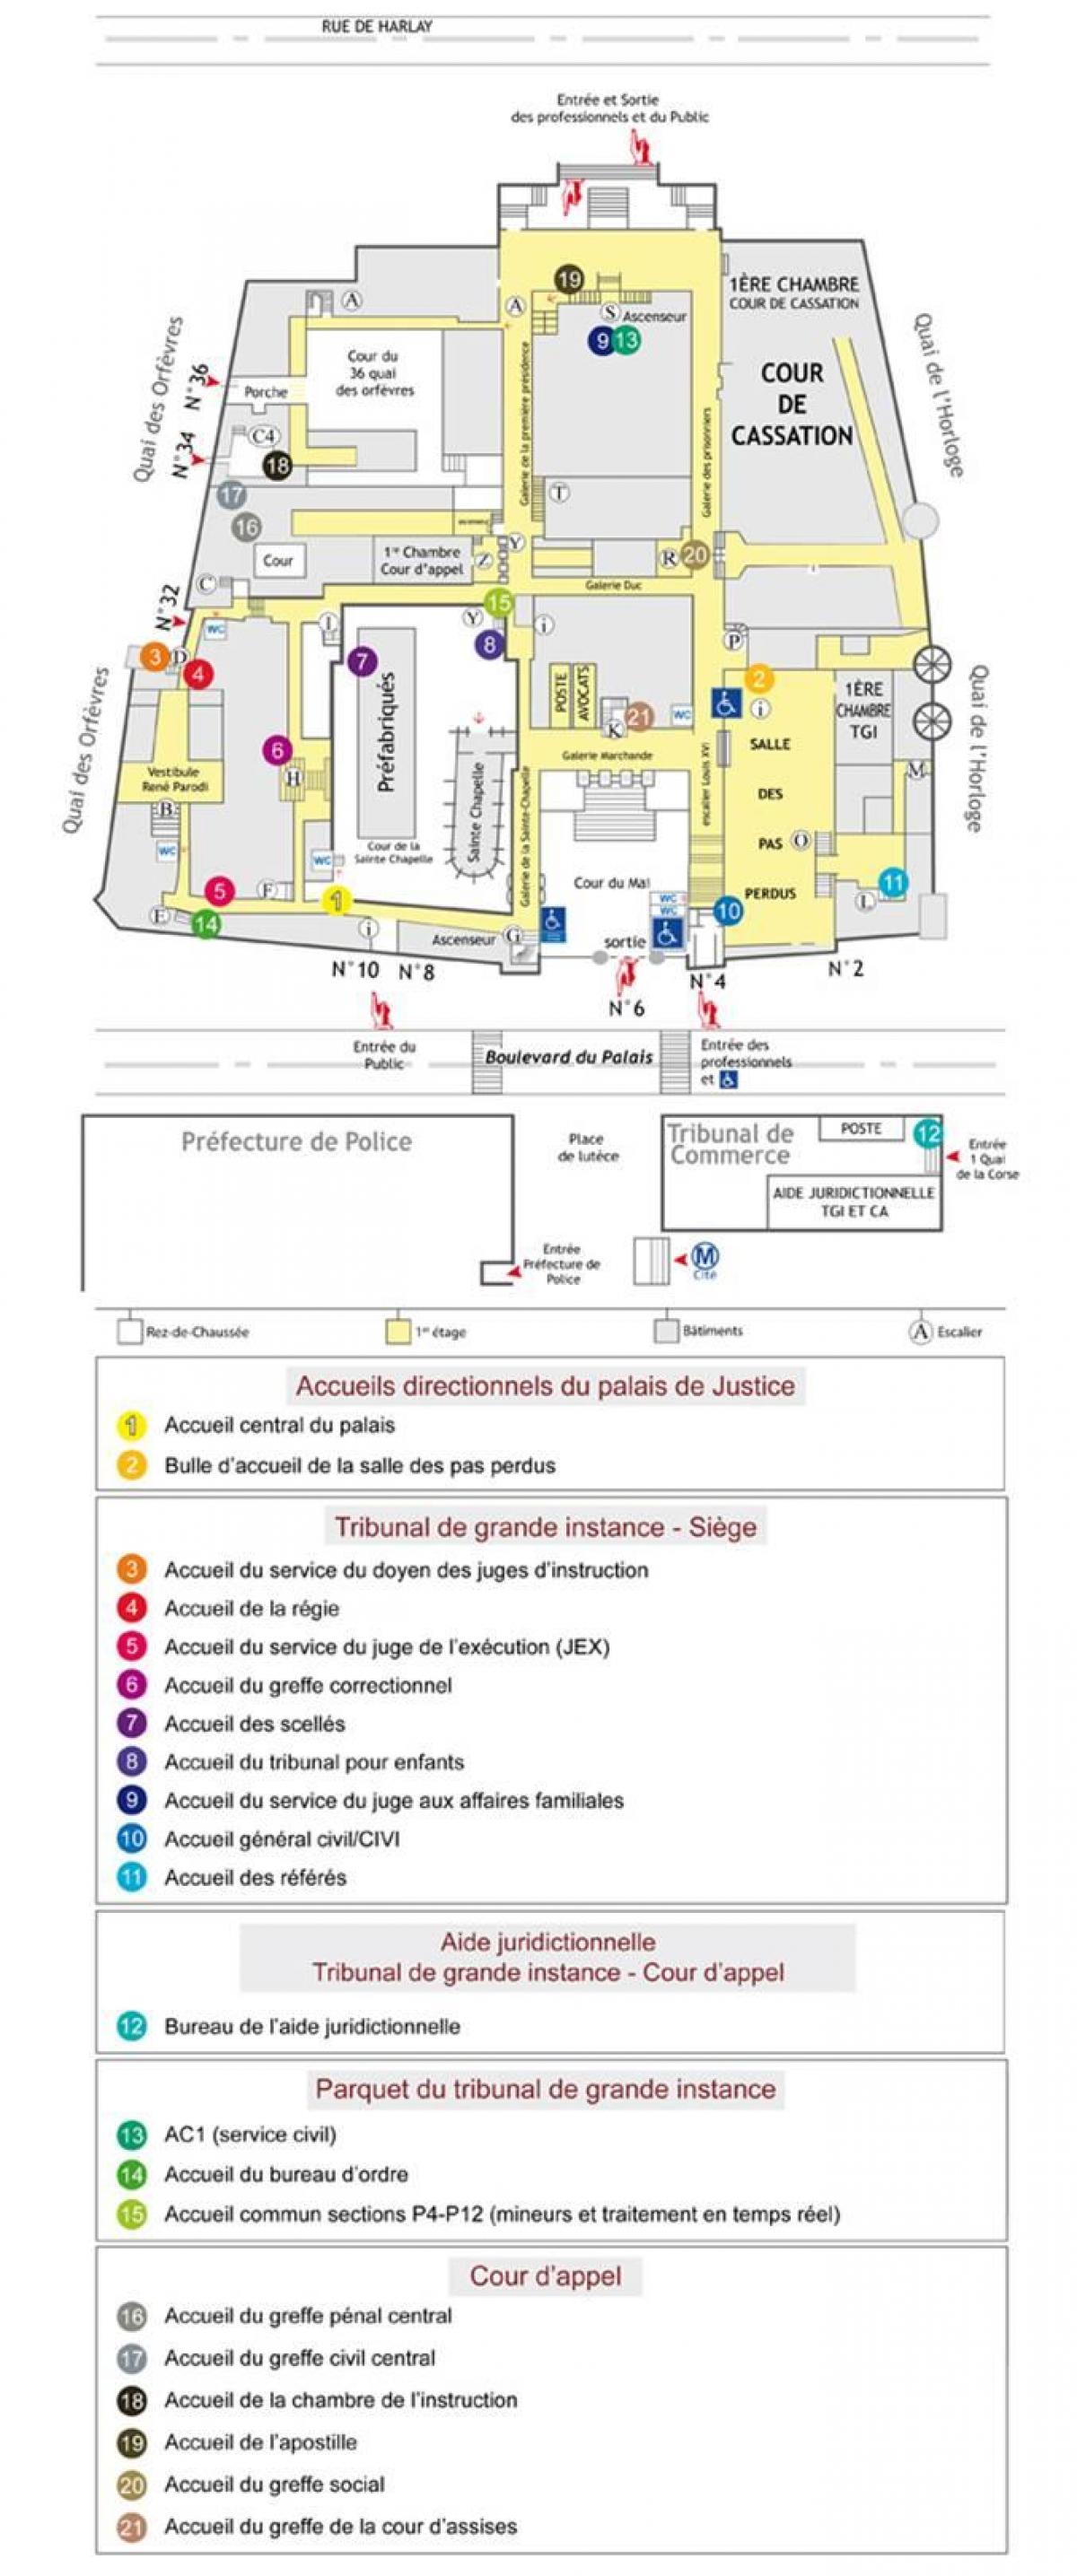 Kart av Palais de Justice Paris